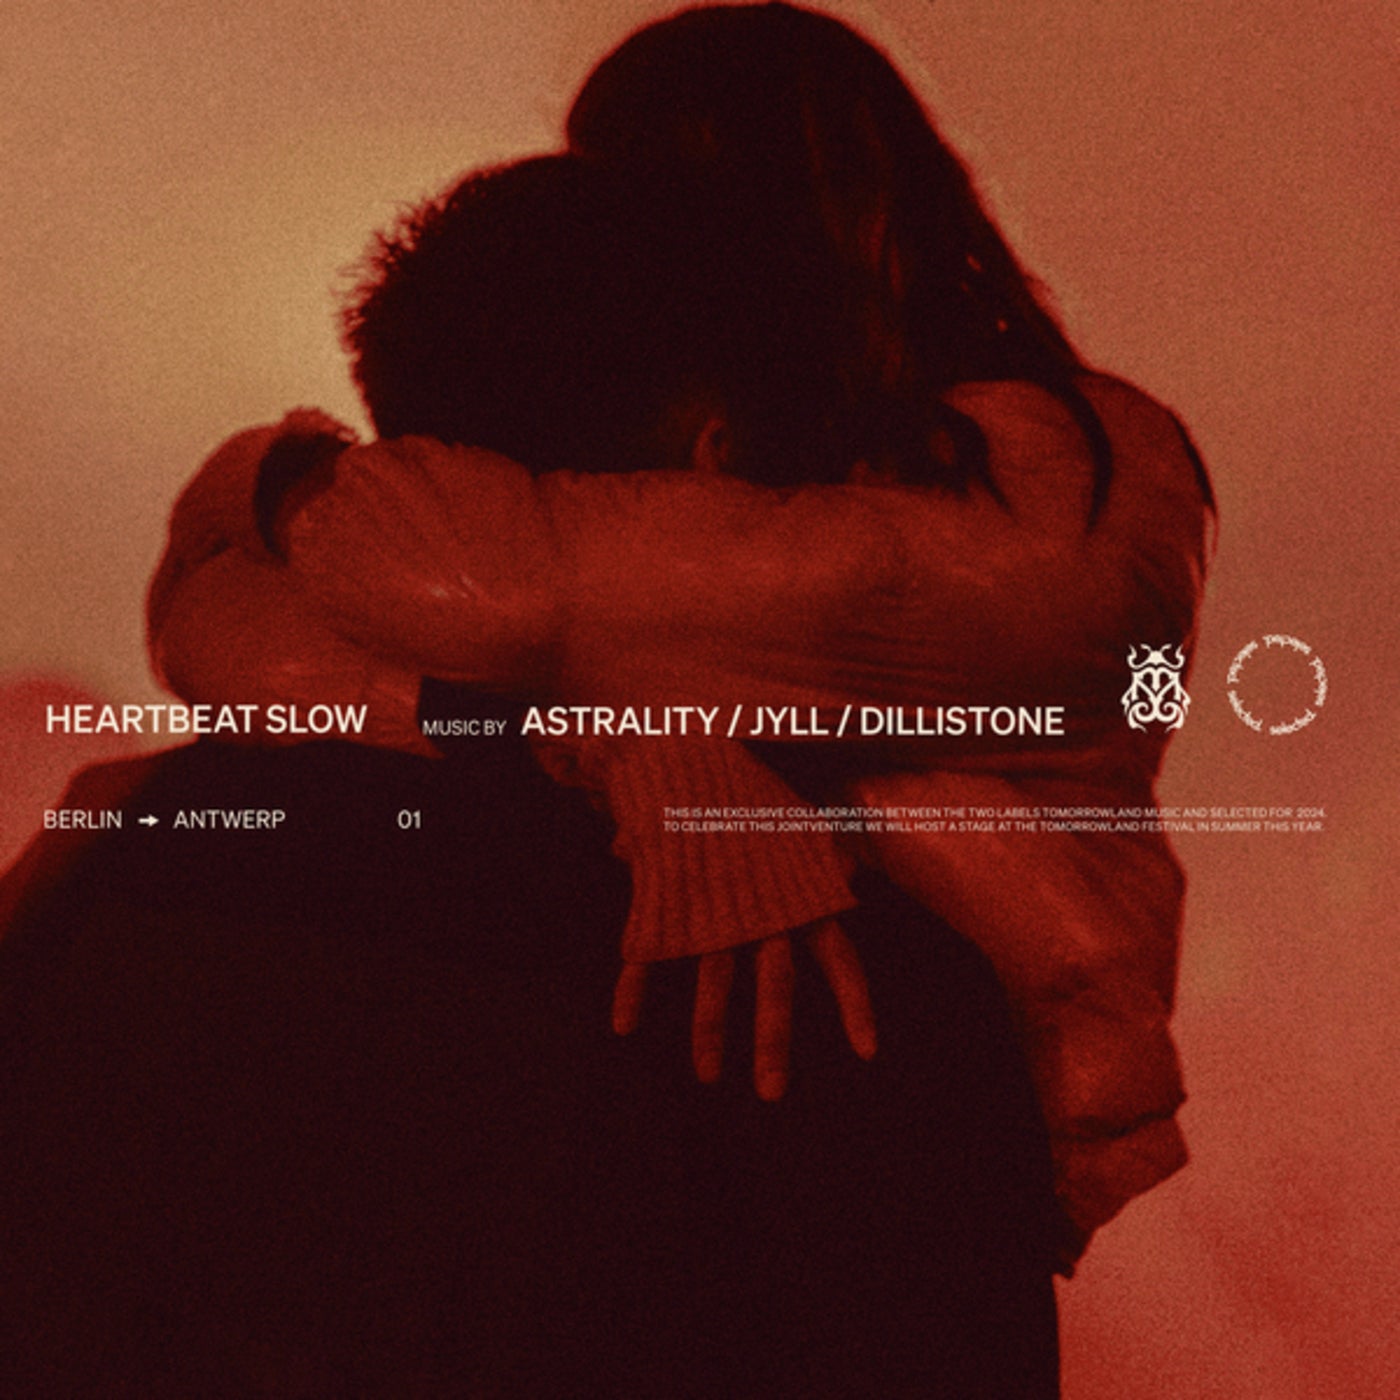 Dillistone, Astrality, Jyll - Heartbeat Slow (Extended Mix)